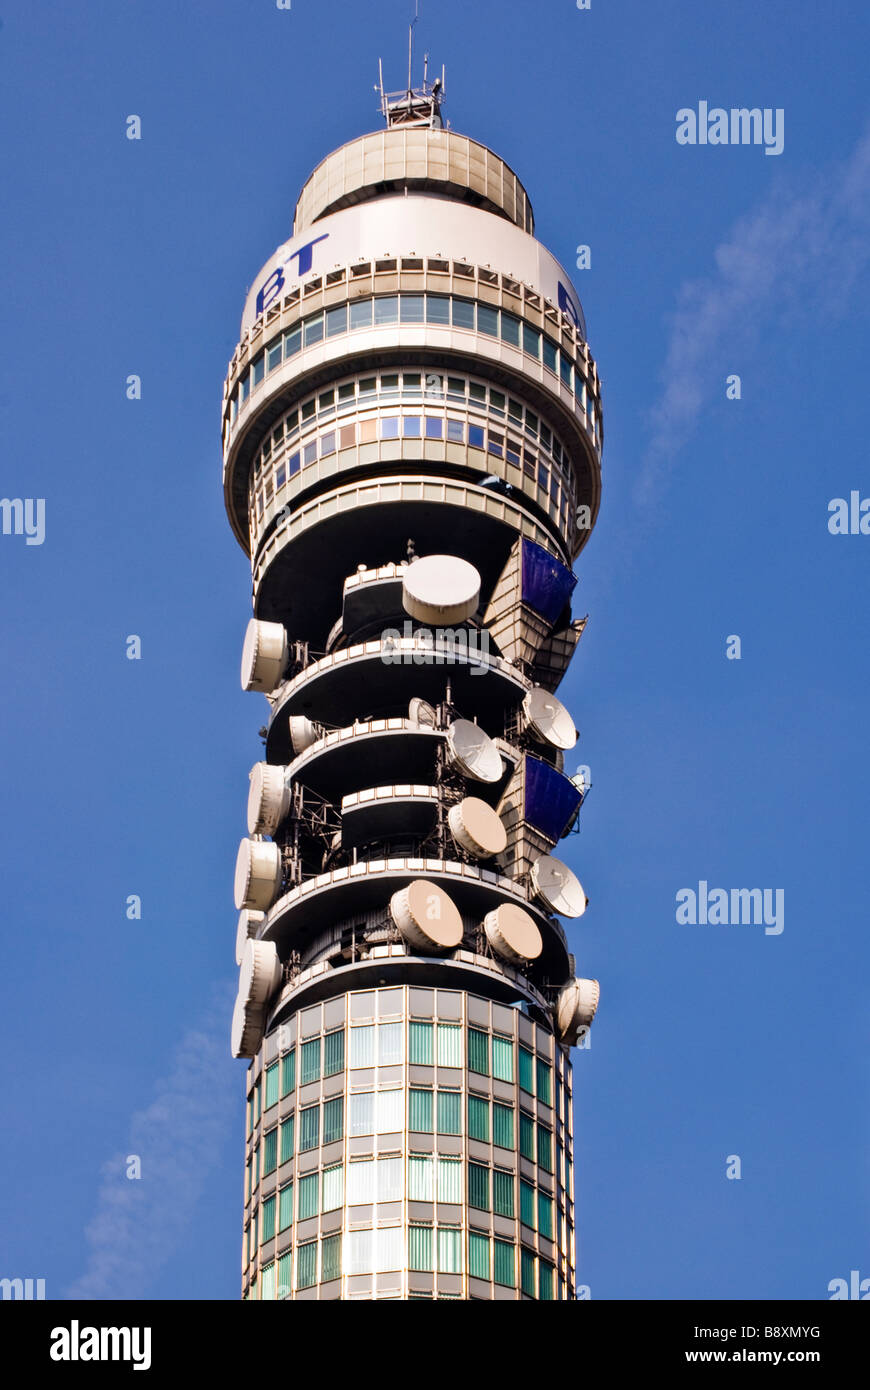 BT Tower telephone exchange and communications tower, Euston, London, UK Stock Photo